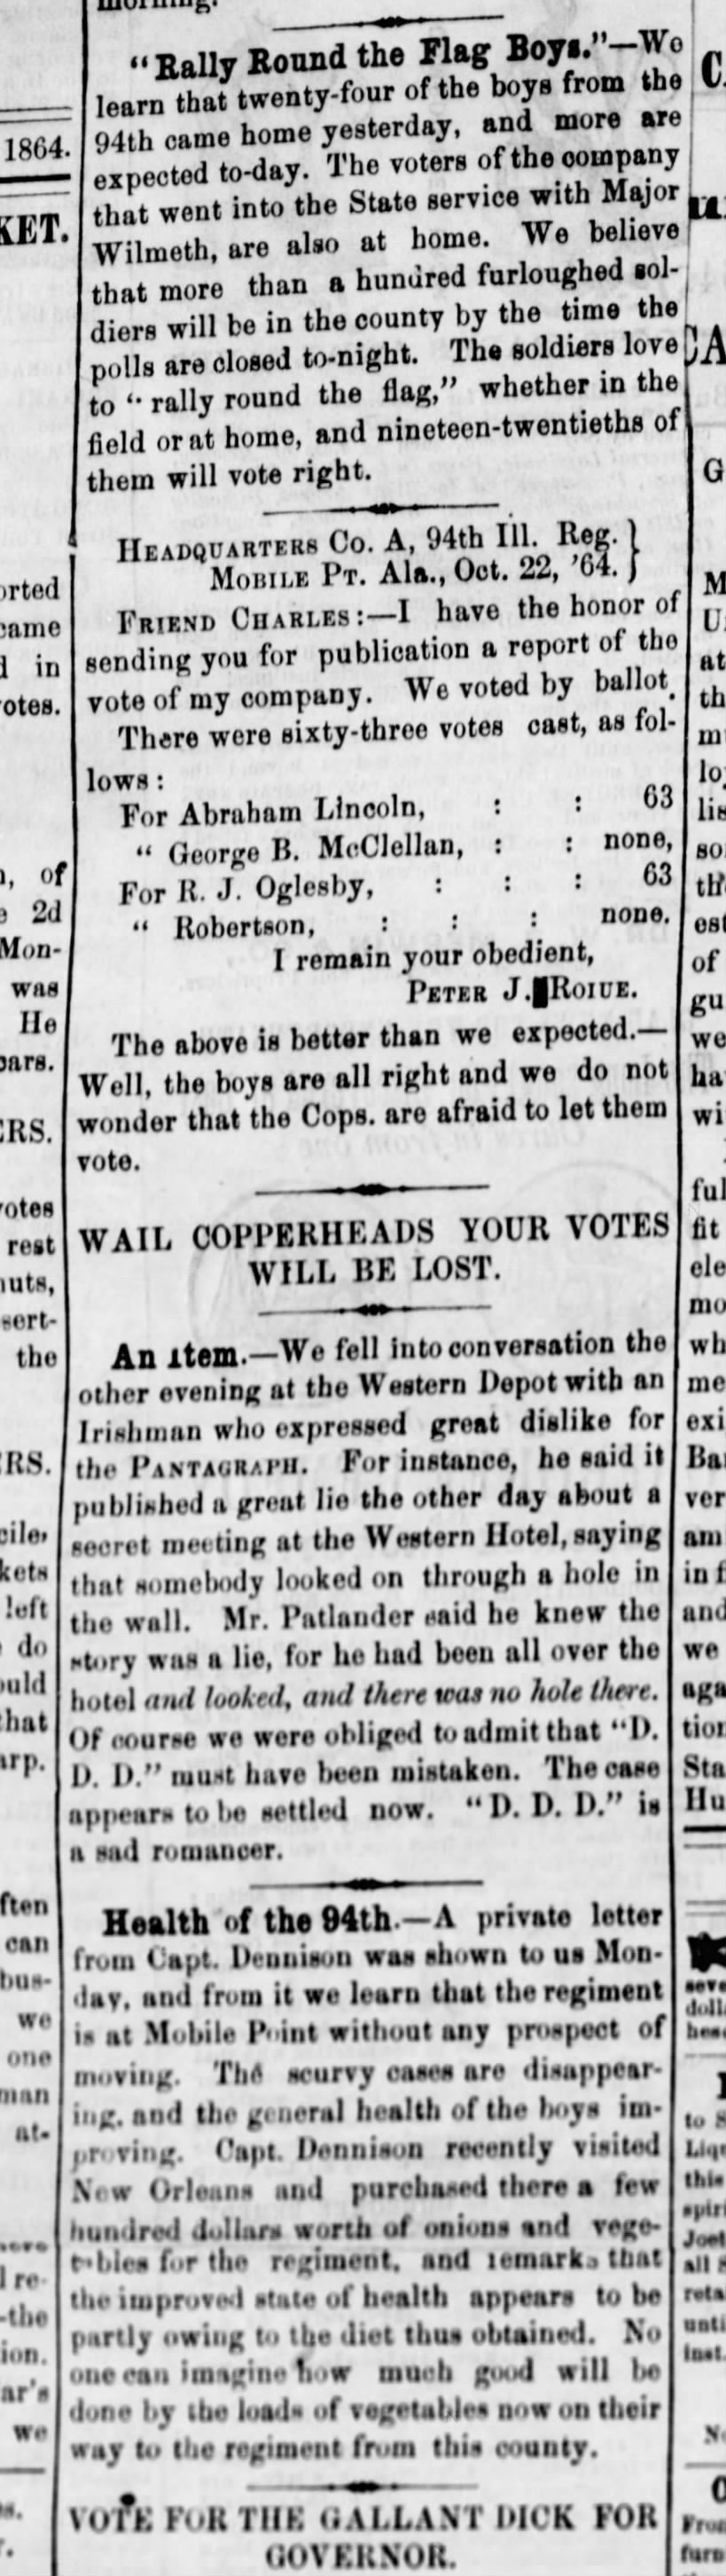 Pantagraph 8 Nov 1864  94th voting and health